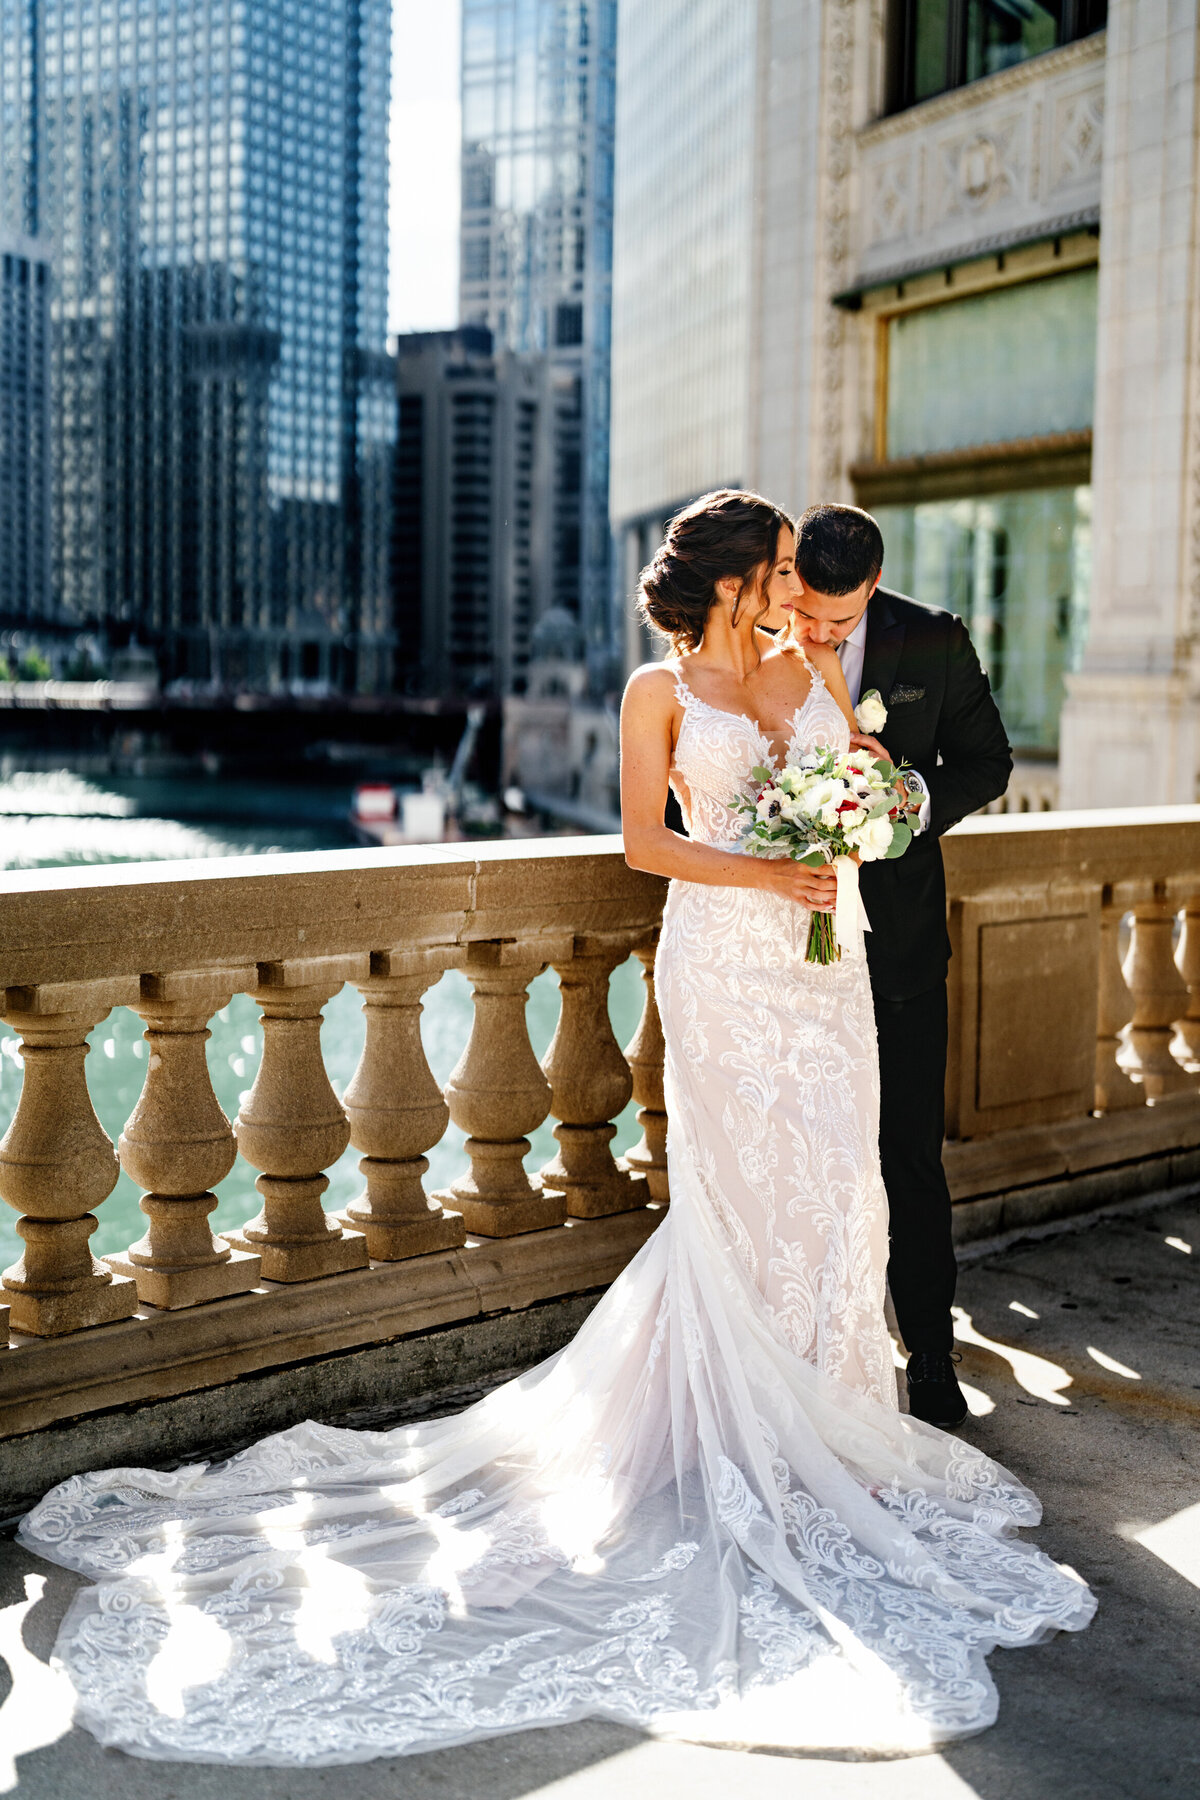 Aspen-Avenue-Chicago-Wedding-Photographer-Fairlie-simply-elegant-xo-anna-held-floral-studio-tamara-makeup-rustic-modern-hocky-fun-hype-elegant-Chicago-Loft-industrial-Romantic-XO-Art-And-Design-FAV-83